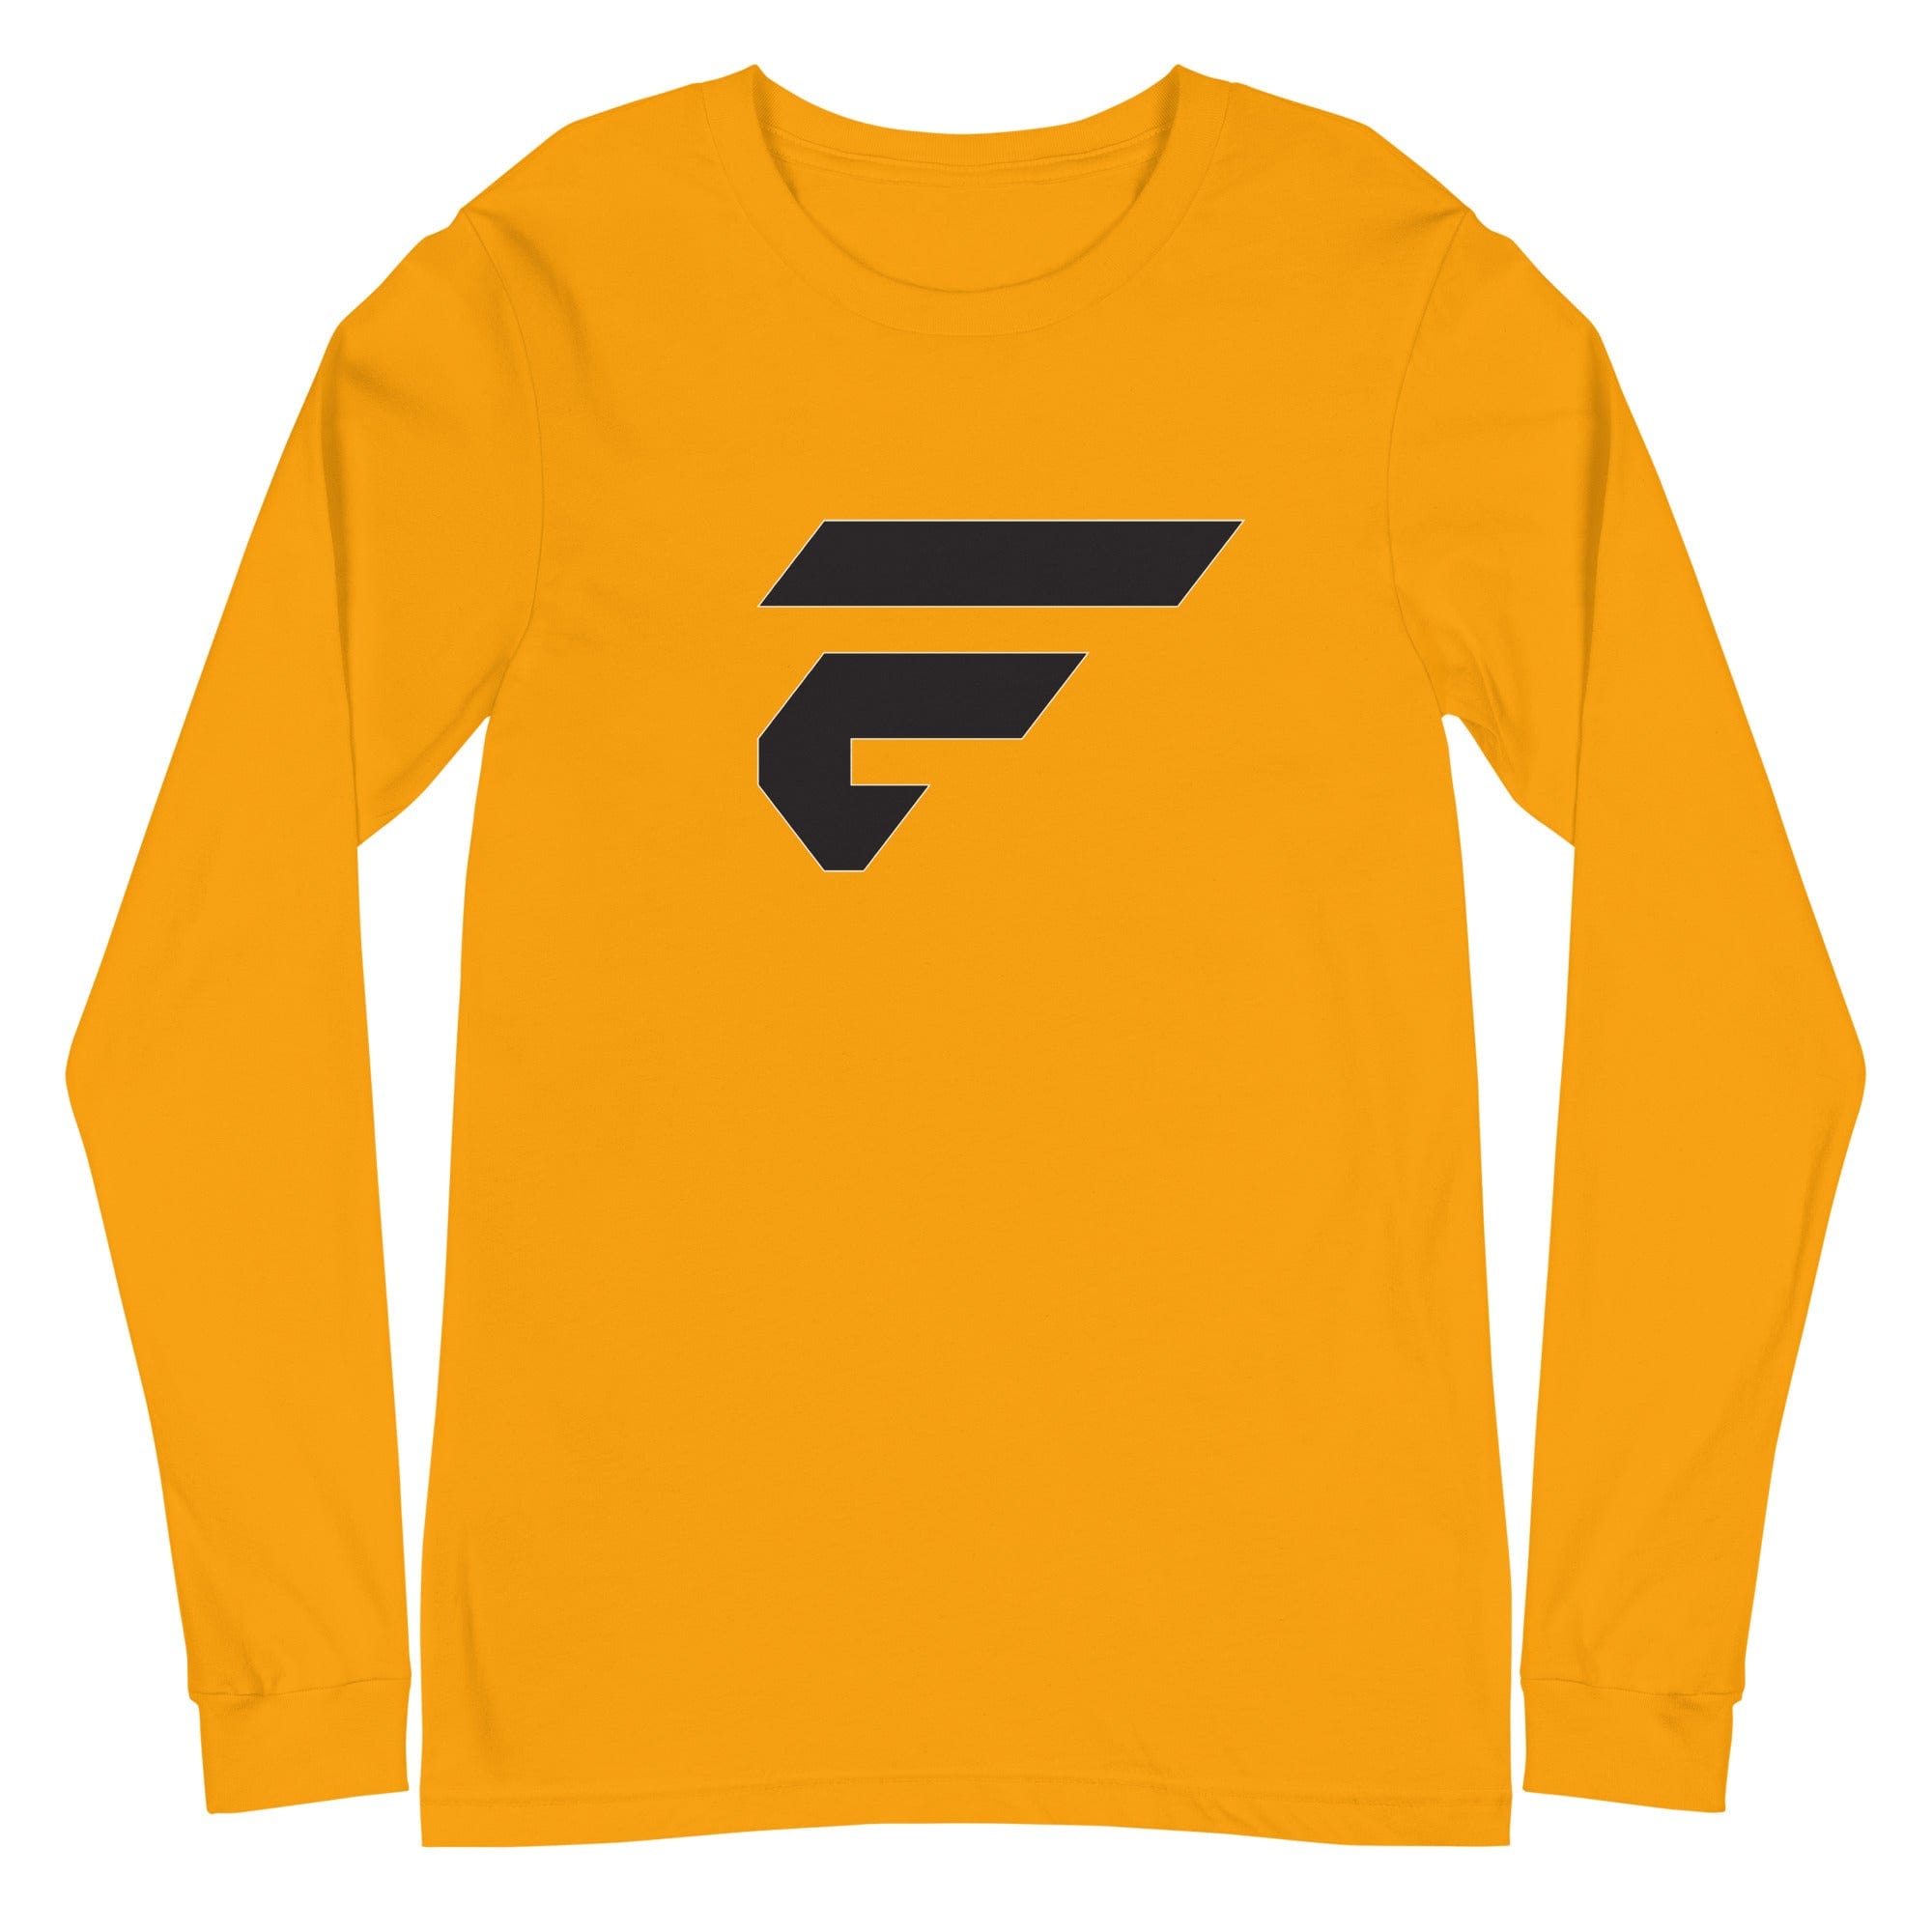 Yellow unisex cotton longsleeve shirt with Fire Cornhole F logo in black